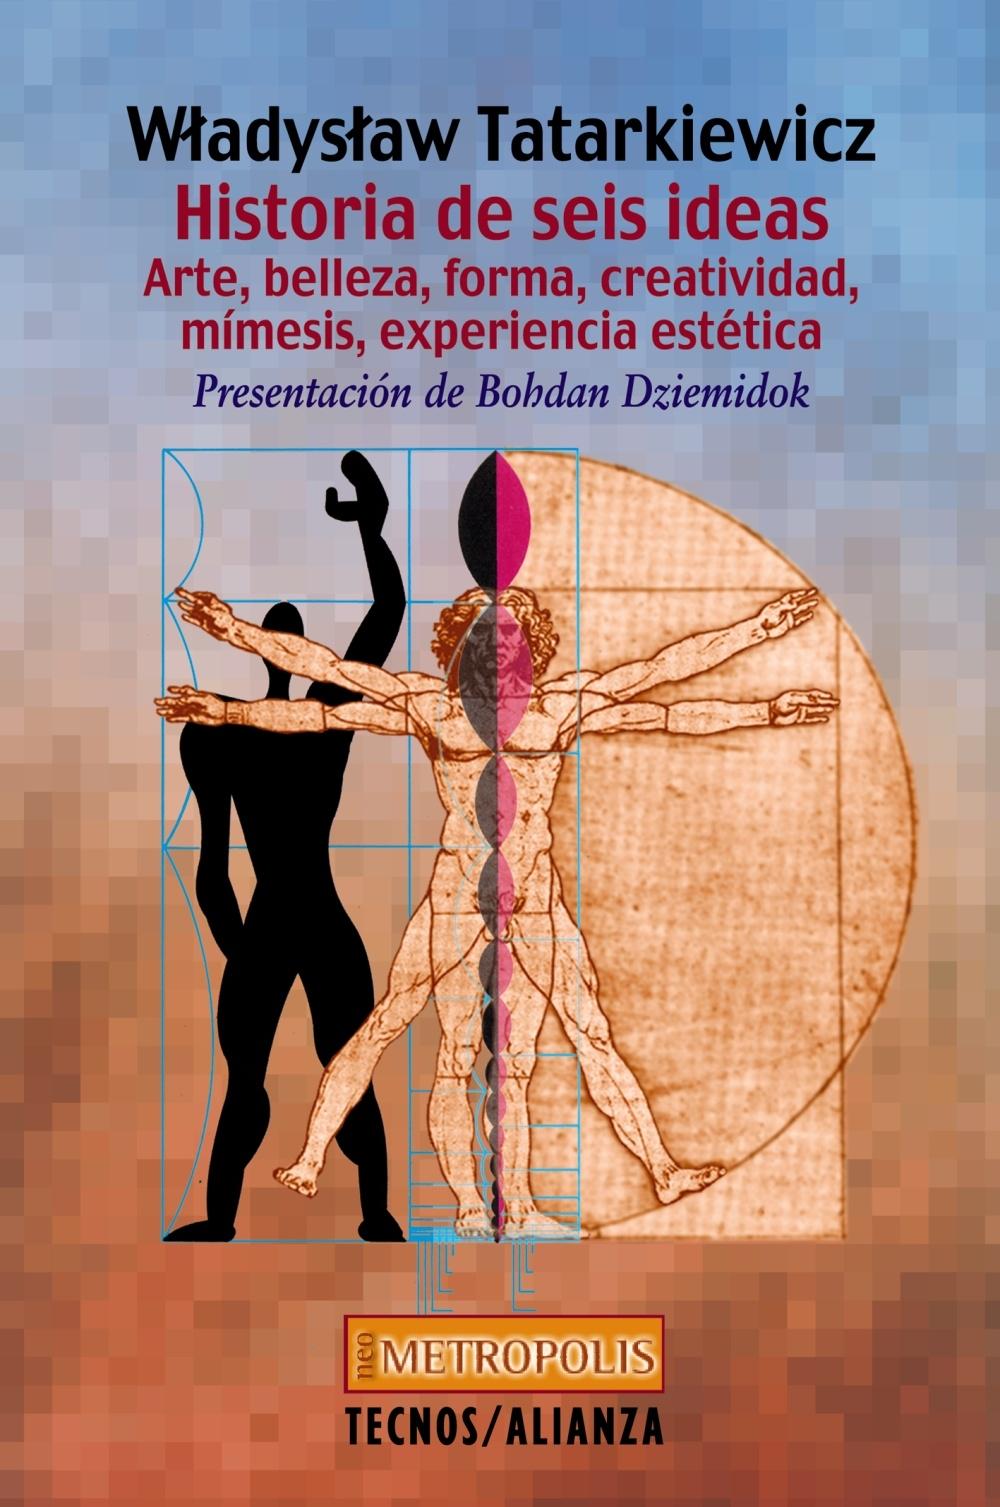 HISTORIA DE SEIS IDEAS "Arte, belleza, forma, creatividad, mímesis, experiencia estética"